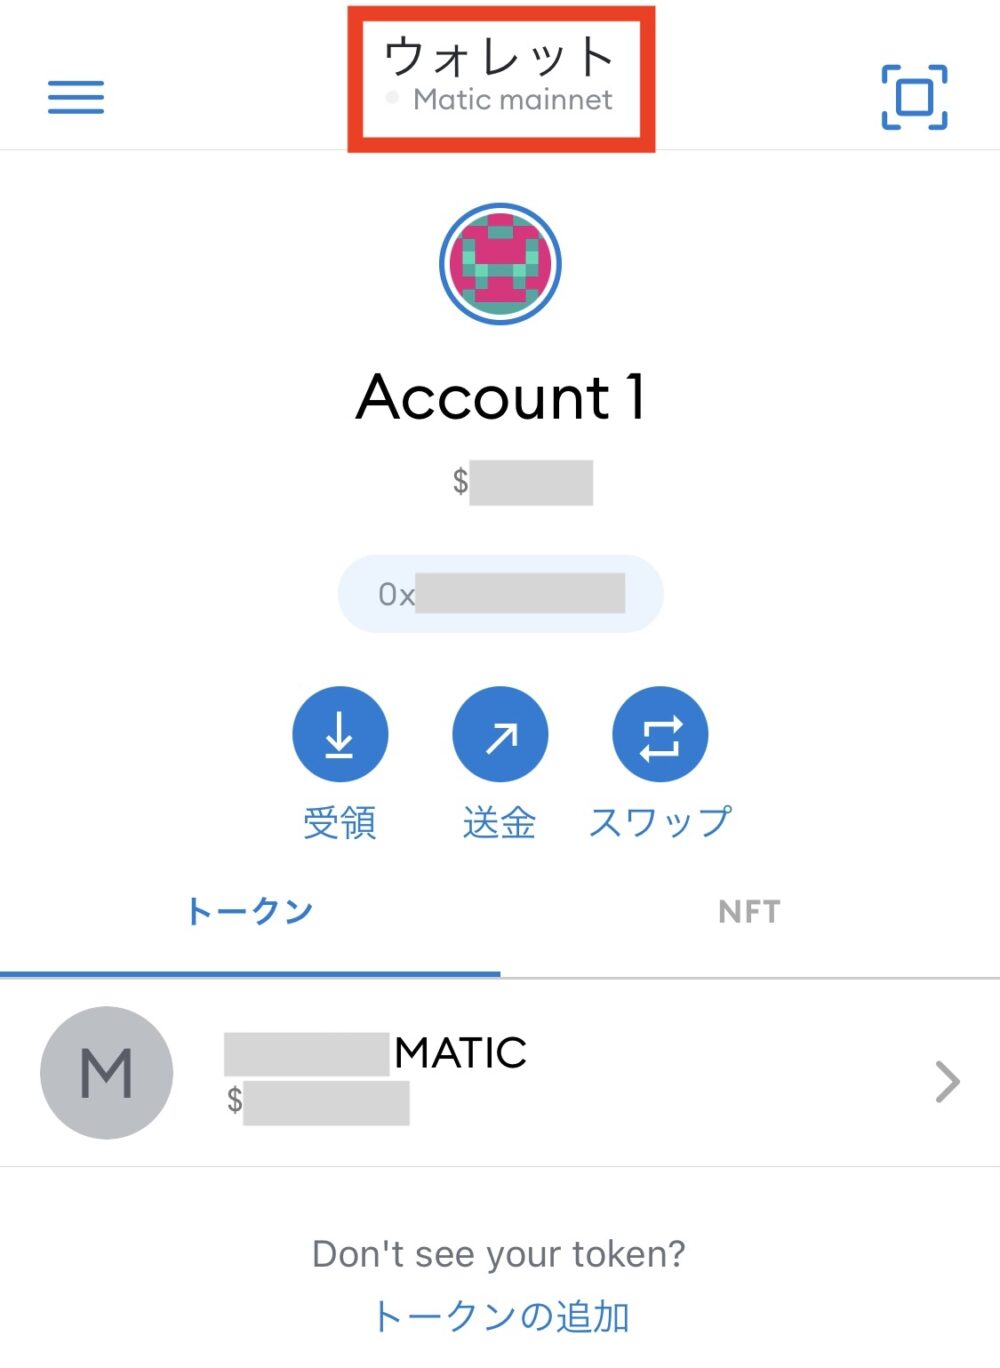 MetaMask（メタマスク）のスマホアプリにPolygon（ポリゴン：Matic mainnet）を追加する方法